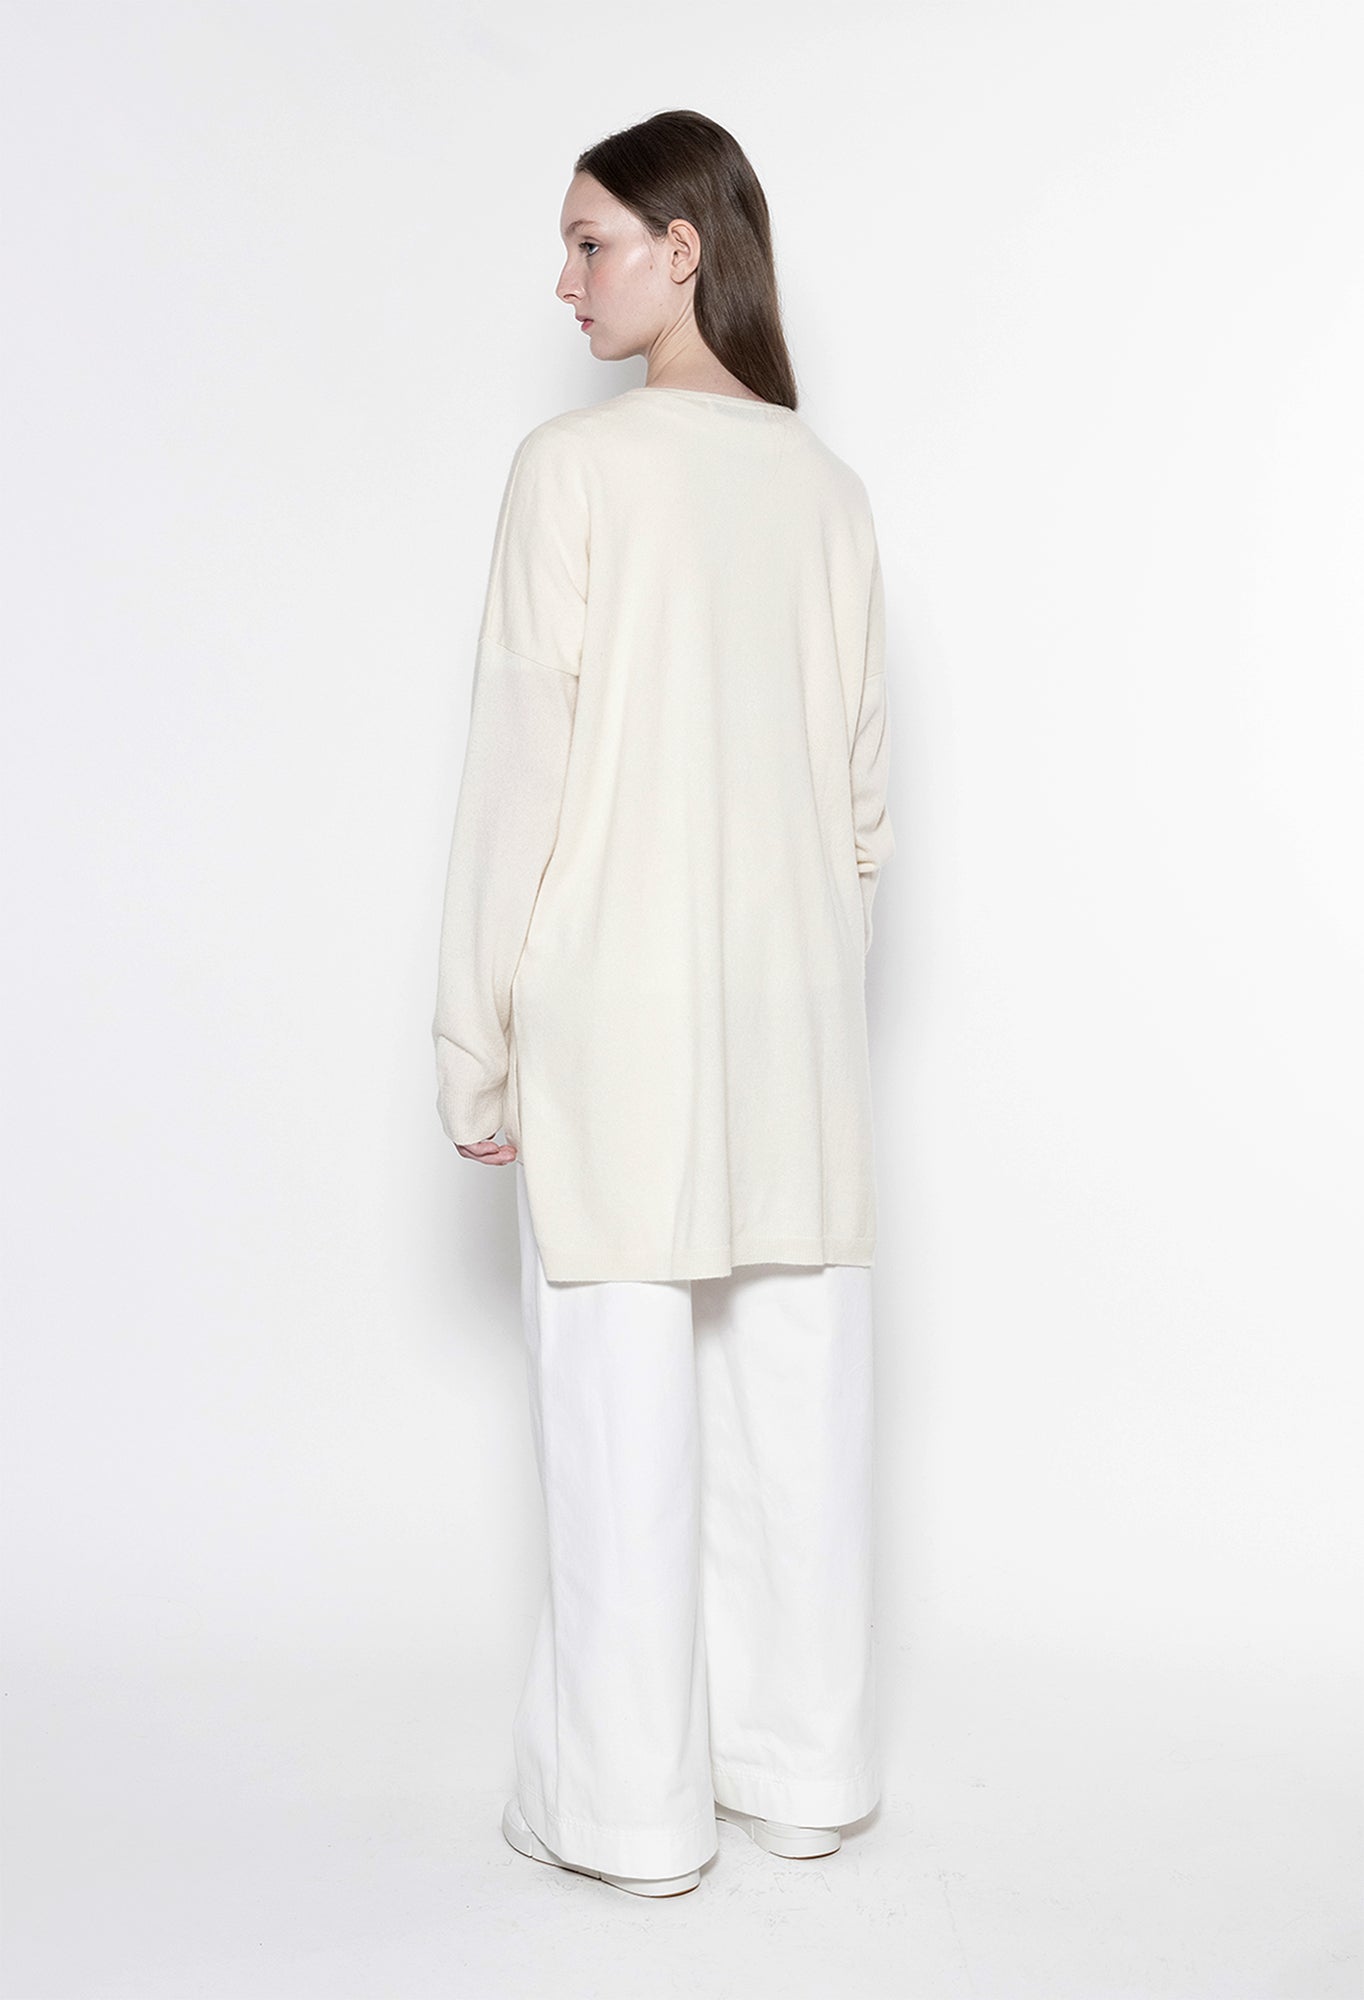 YARA - 12gg Cashmere V-Neck Sweater in Undyed White